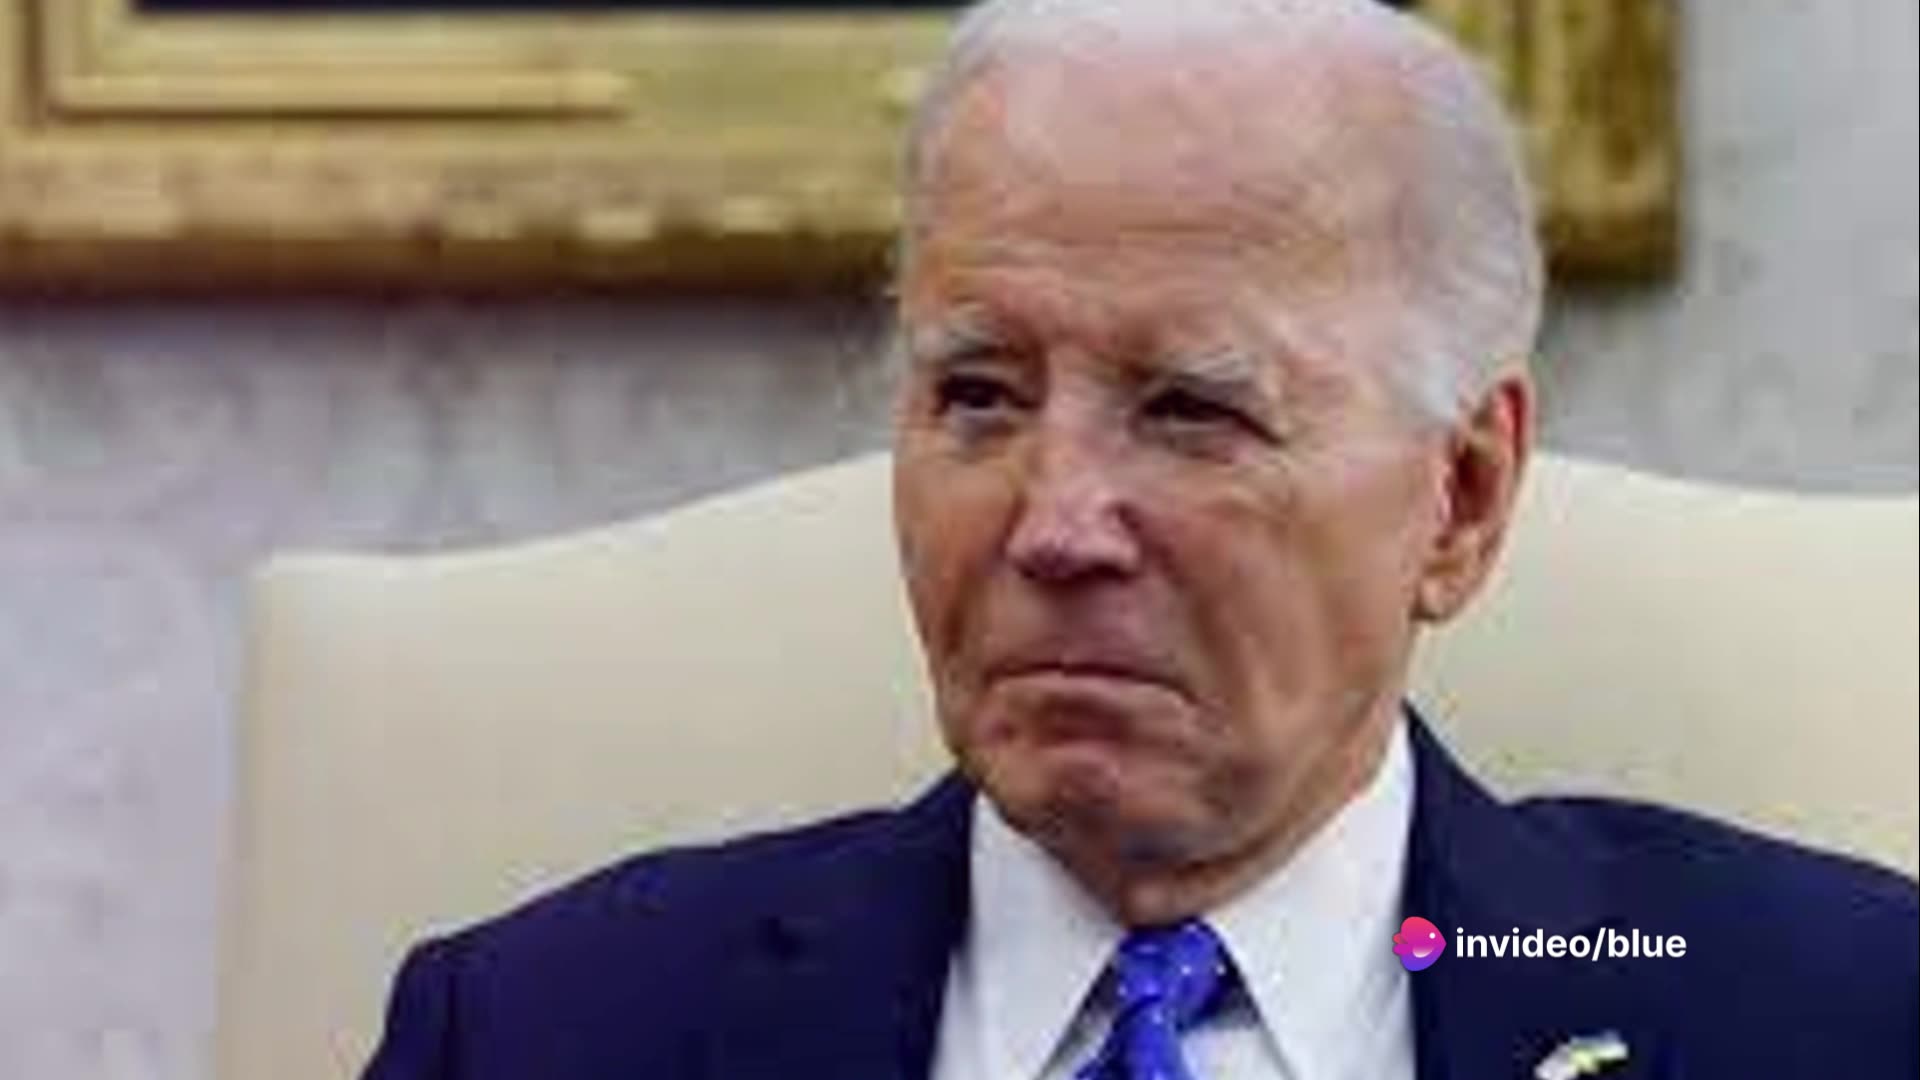 Biden's Frustration with Netanyahu: A Hollow Sentiment?